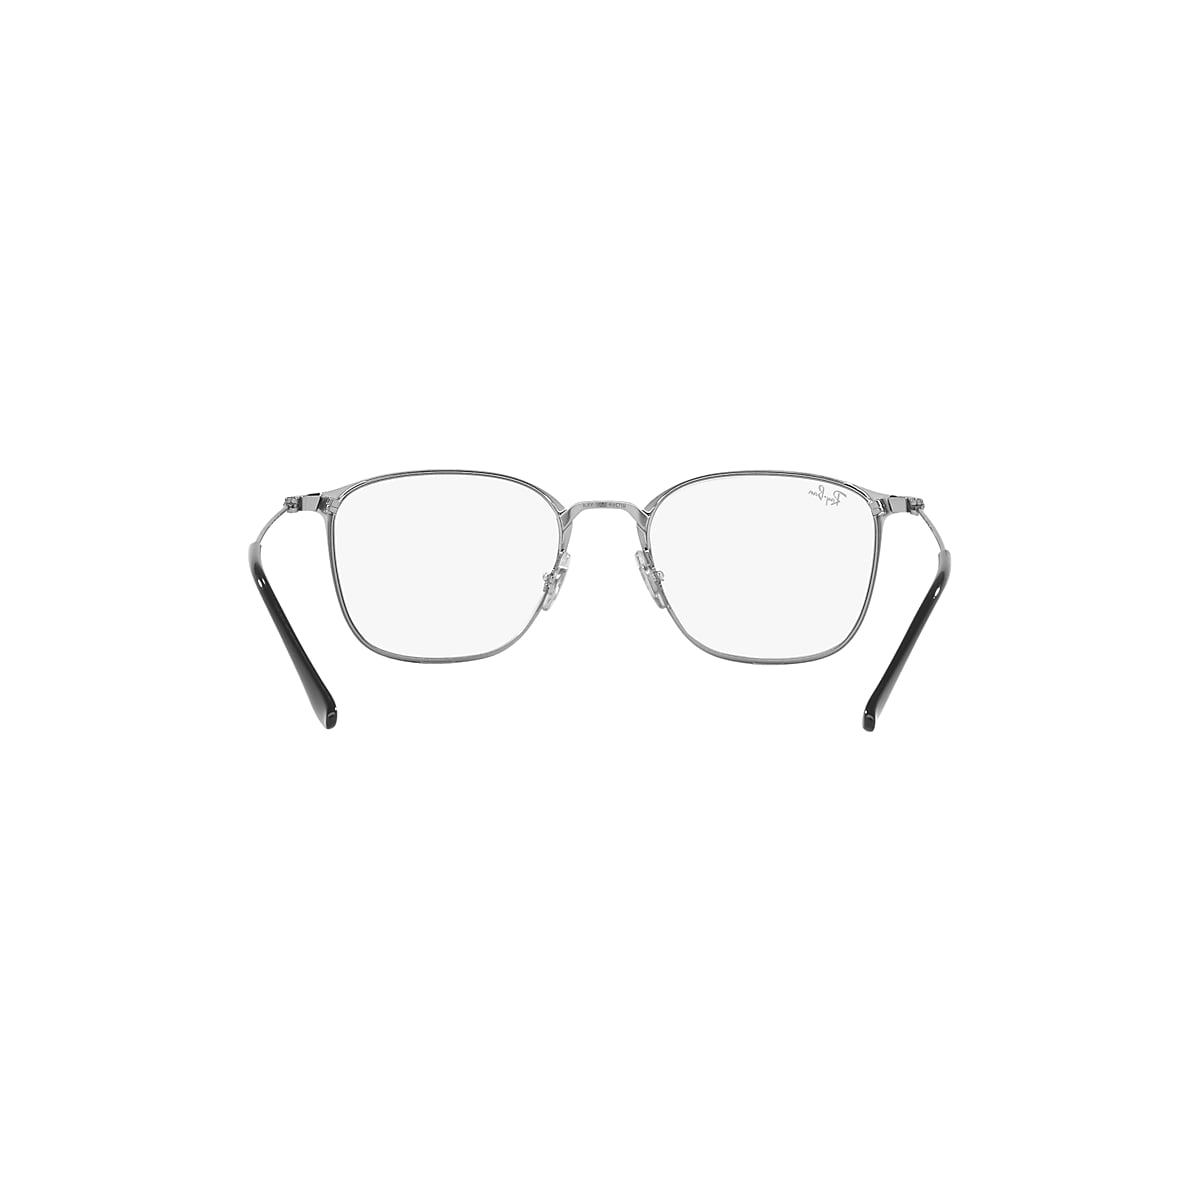 RB6466 OPTICS Eyeglasses with Grey On Gunmetal Frame - RB6466 